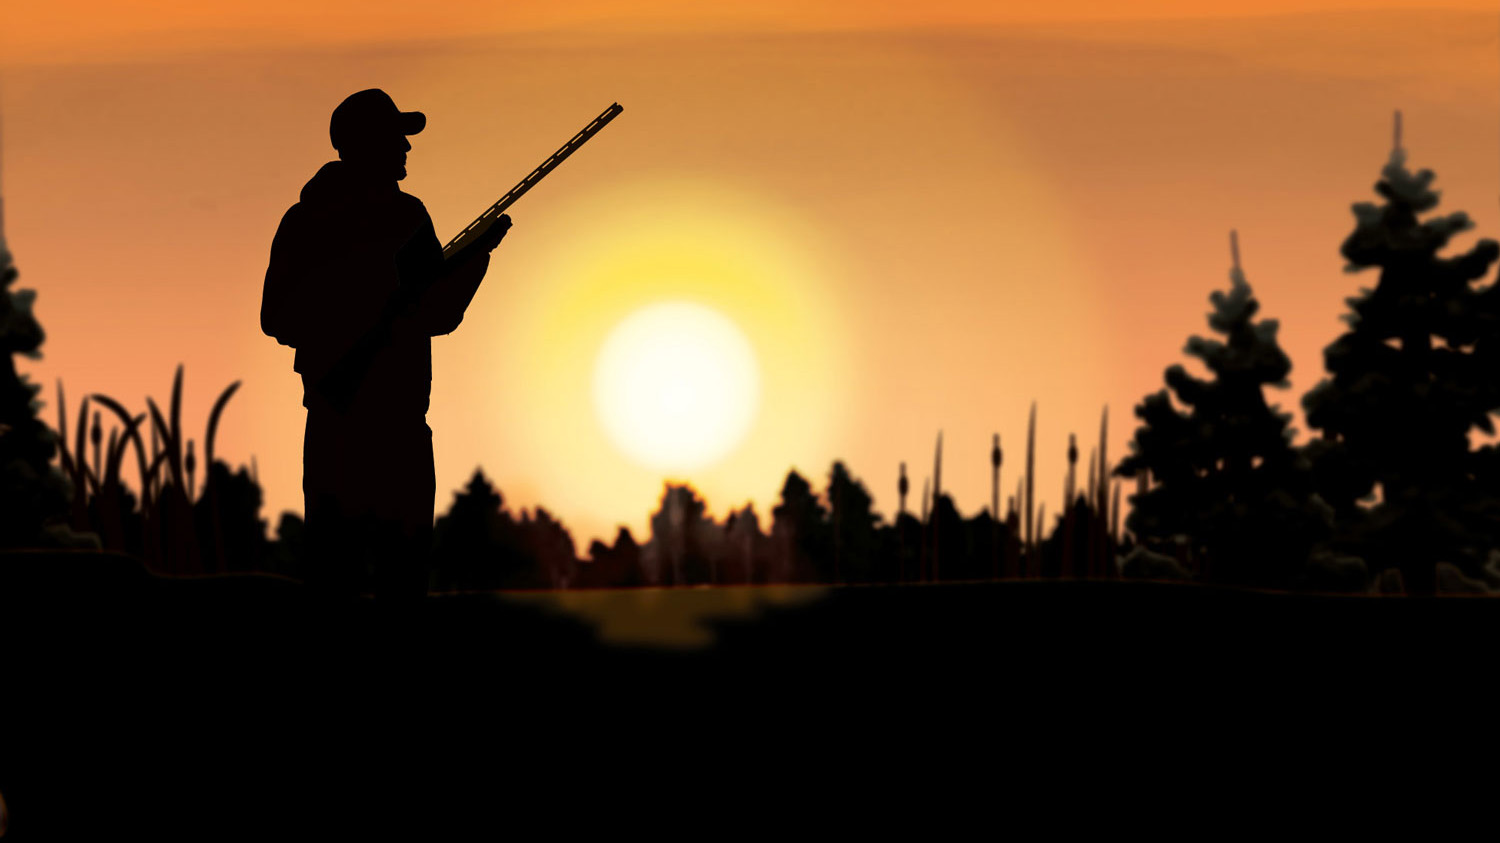 Illustration of a hunter hunting at sunset.